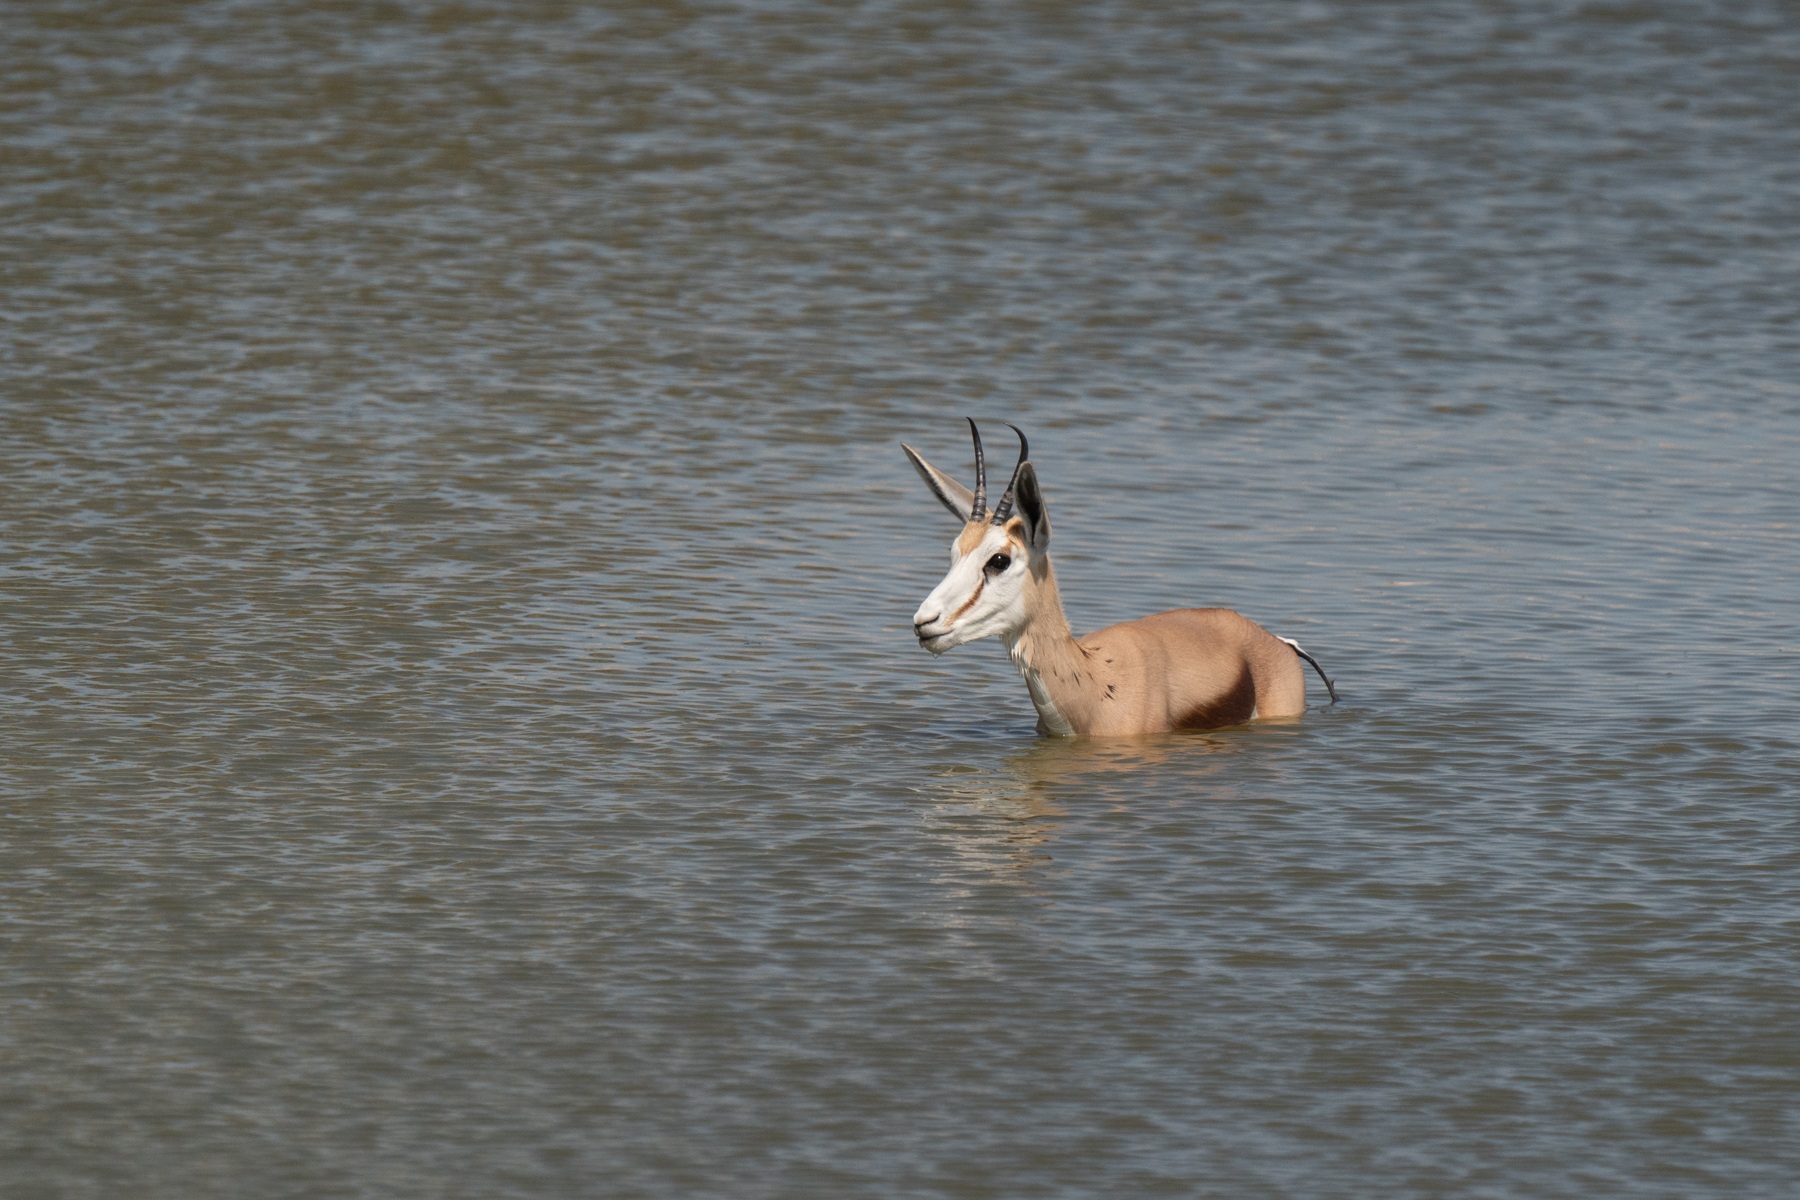 A Springbok takes to the water to cool off in Etosha, Namibia